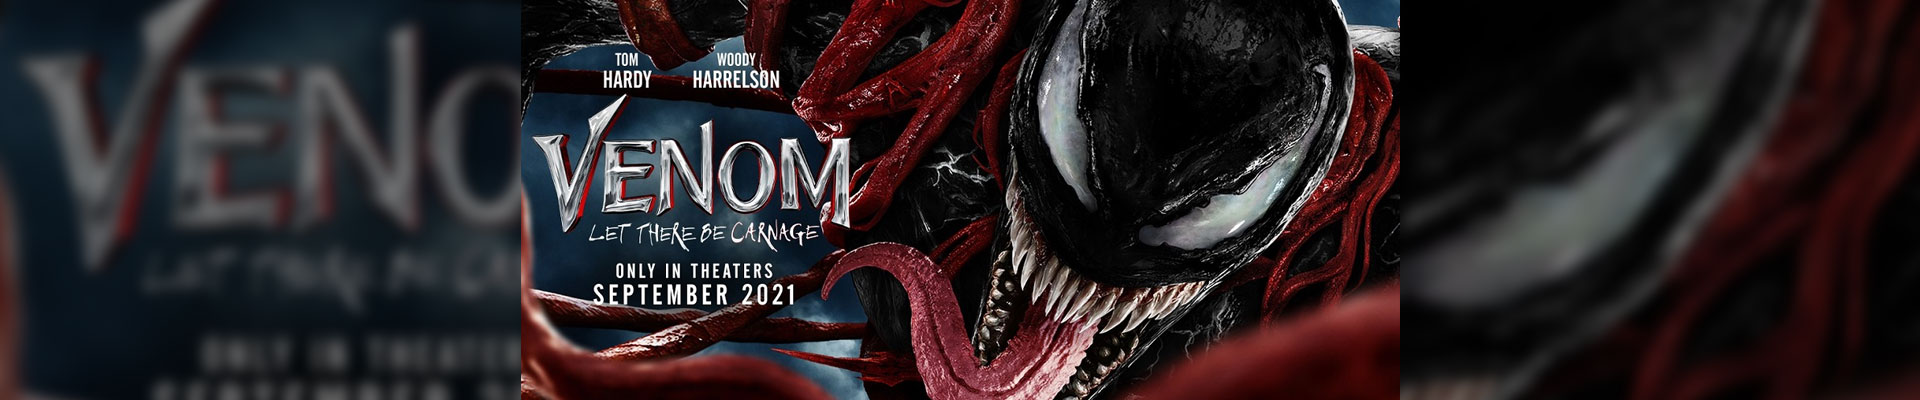 Venom: Let There Be Carnage (2021) เวน่อม 2 : ศึกอสูรแดงเดือด